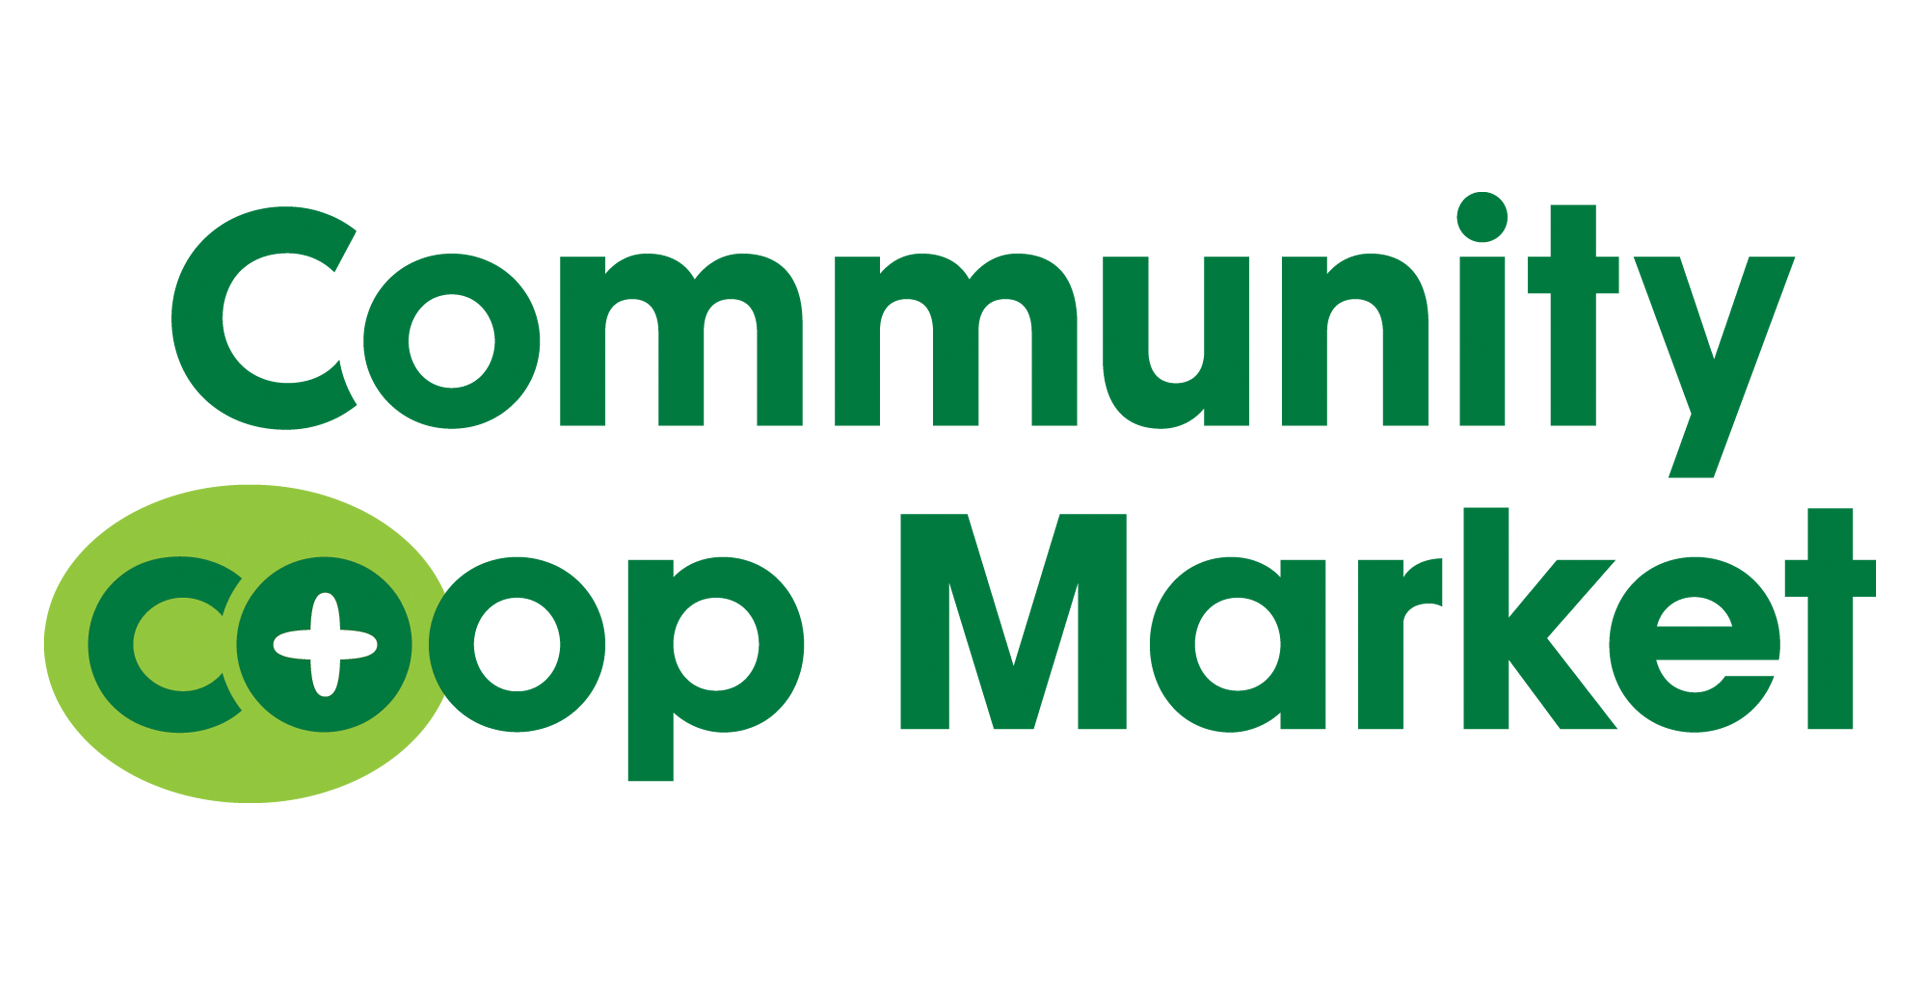 Company logo of Community Co-op Market